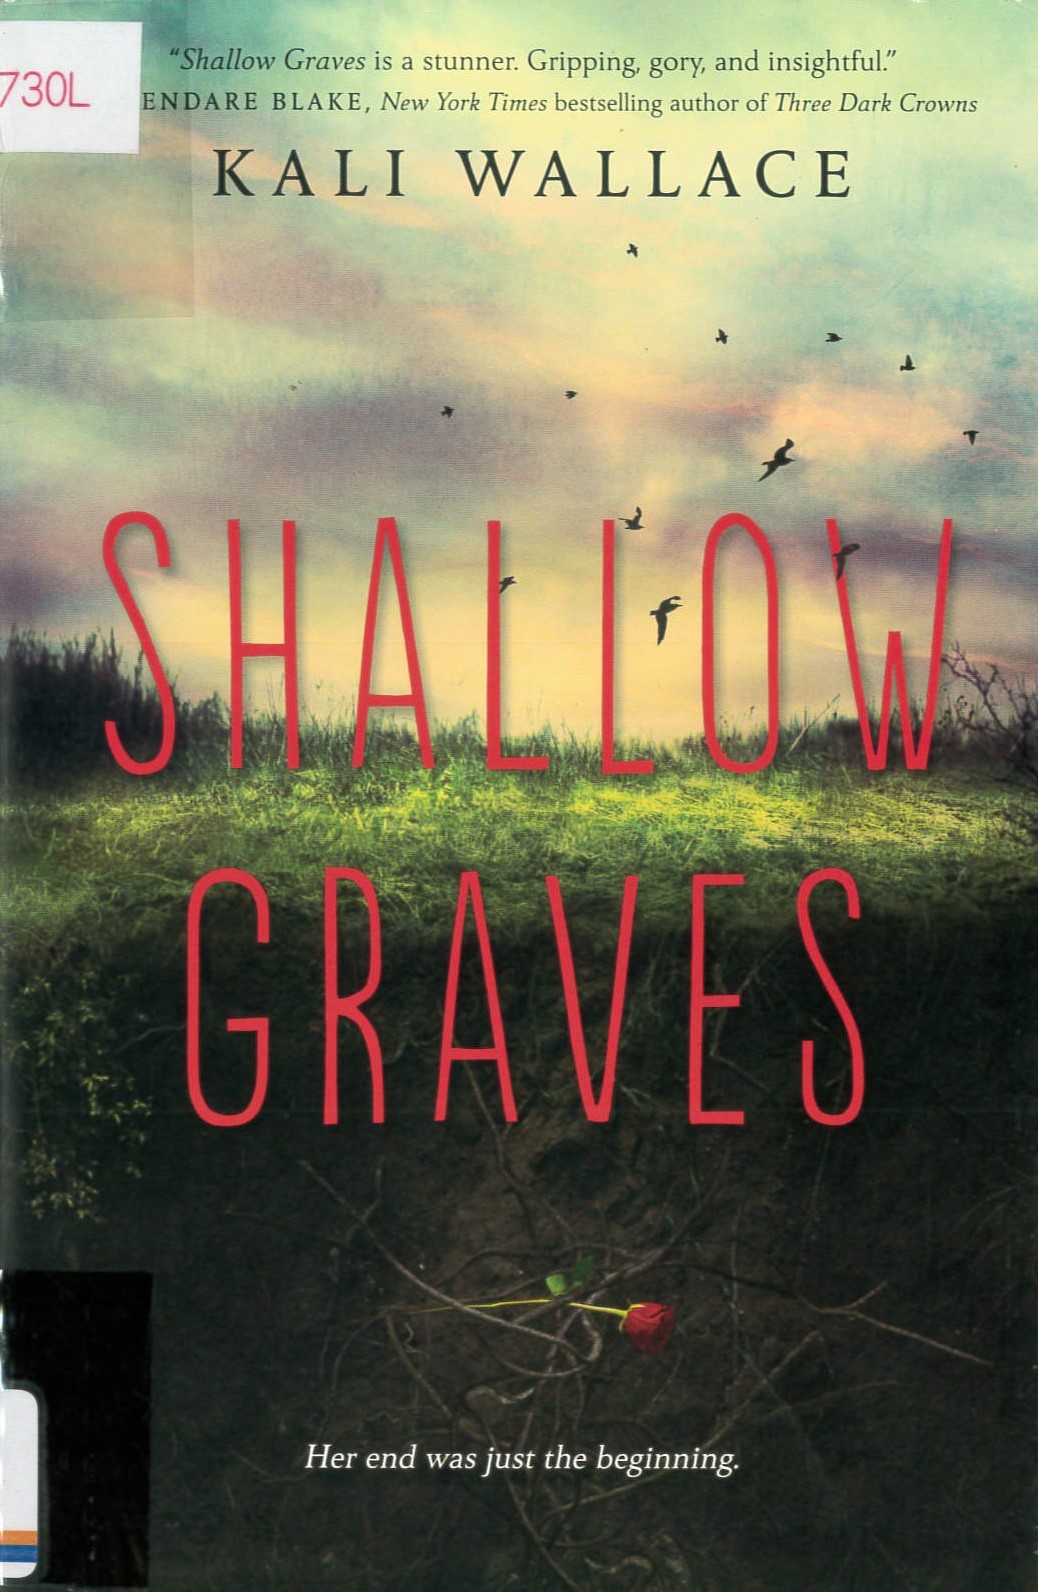 Shallow graves /